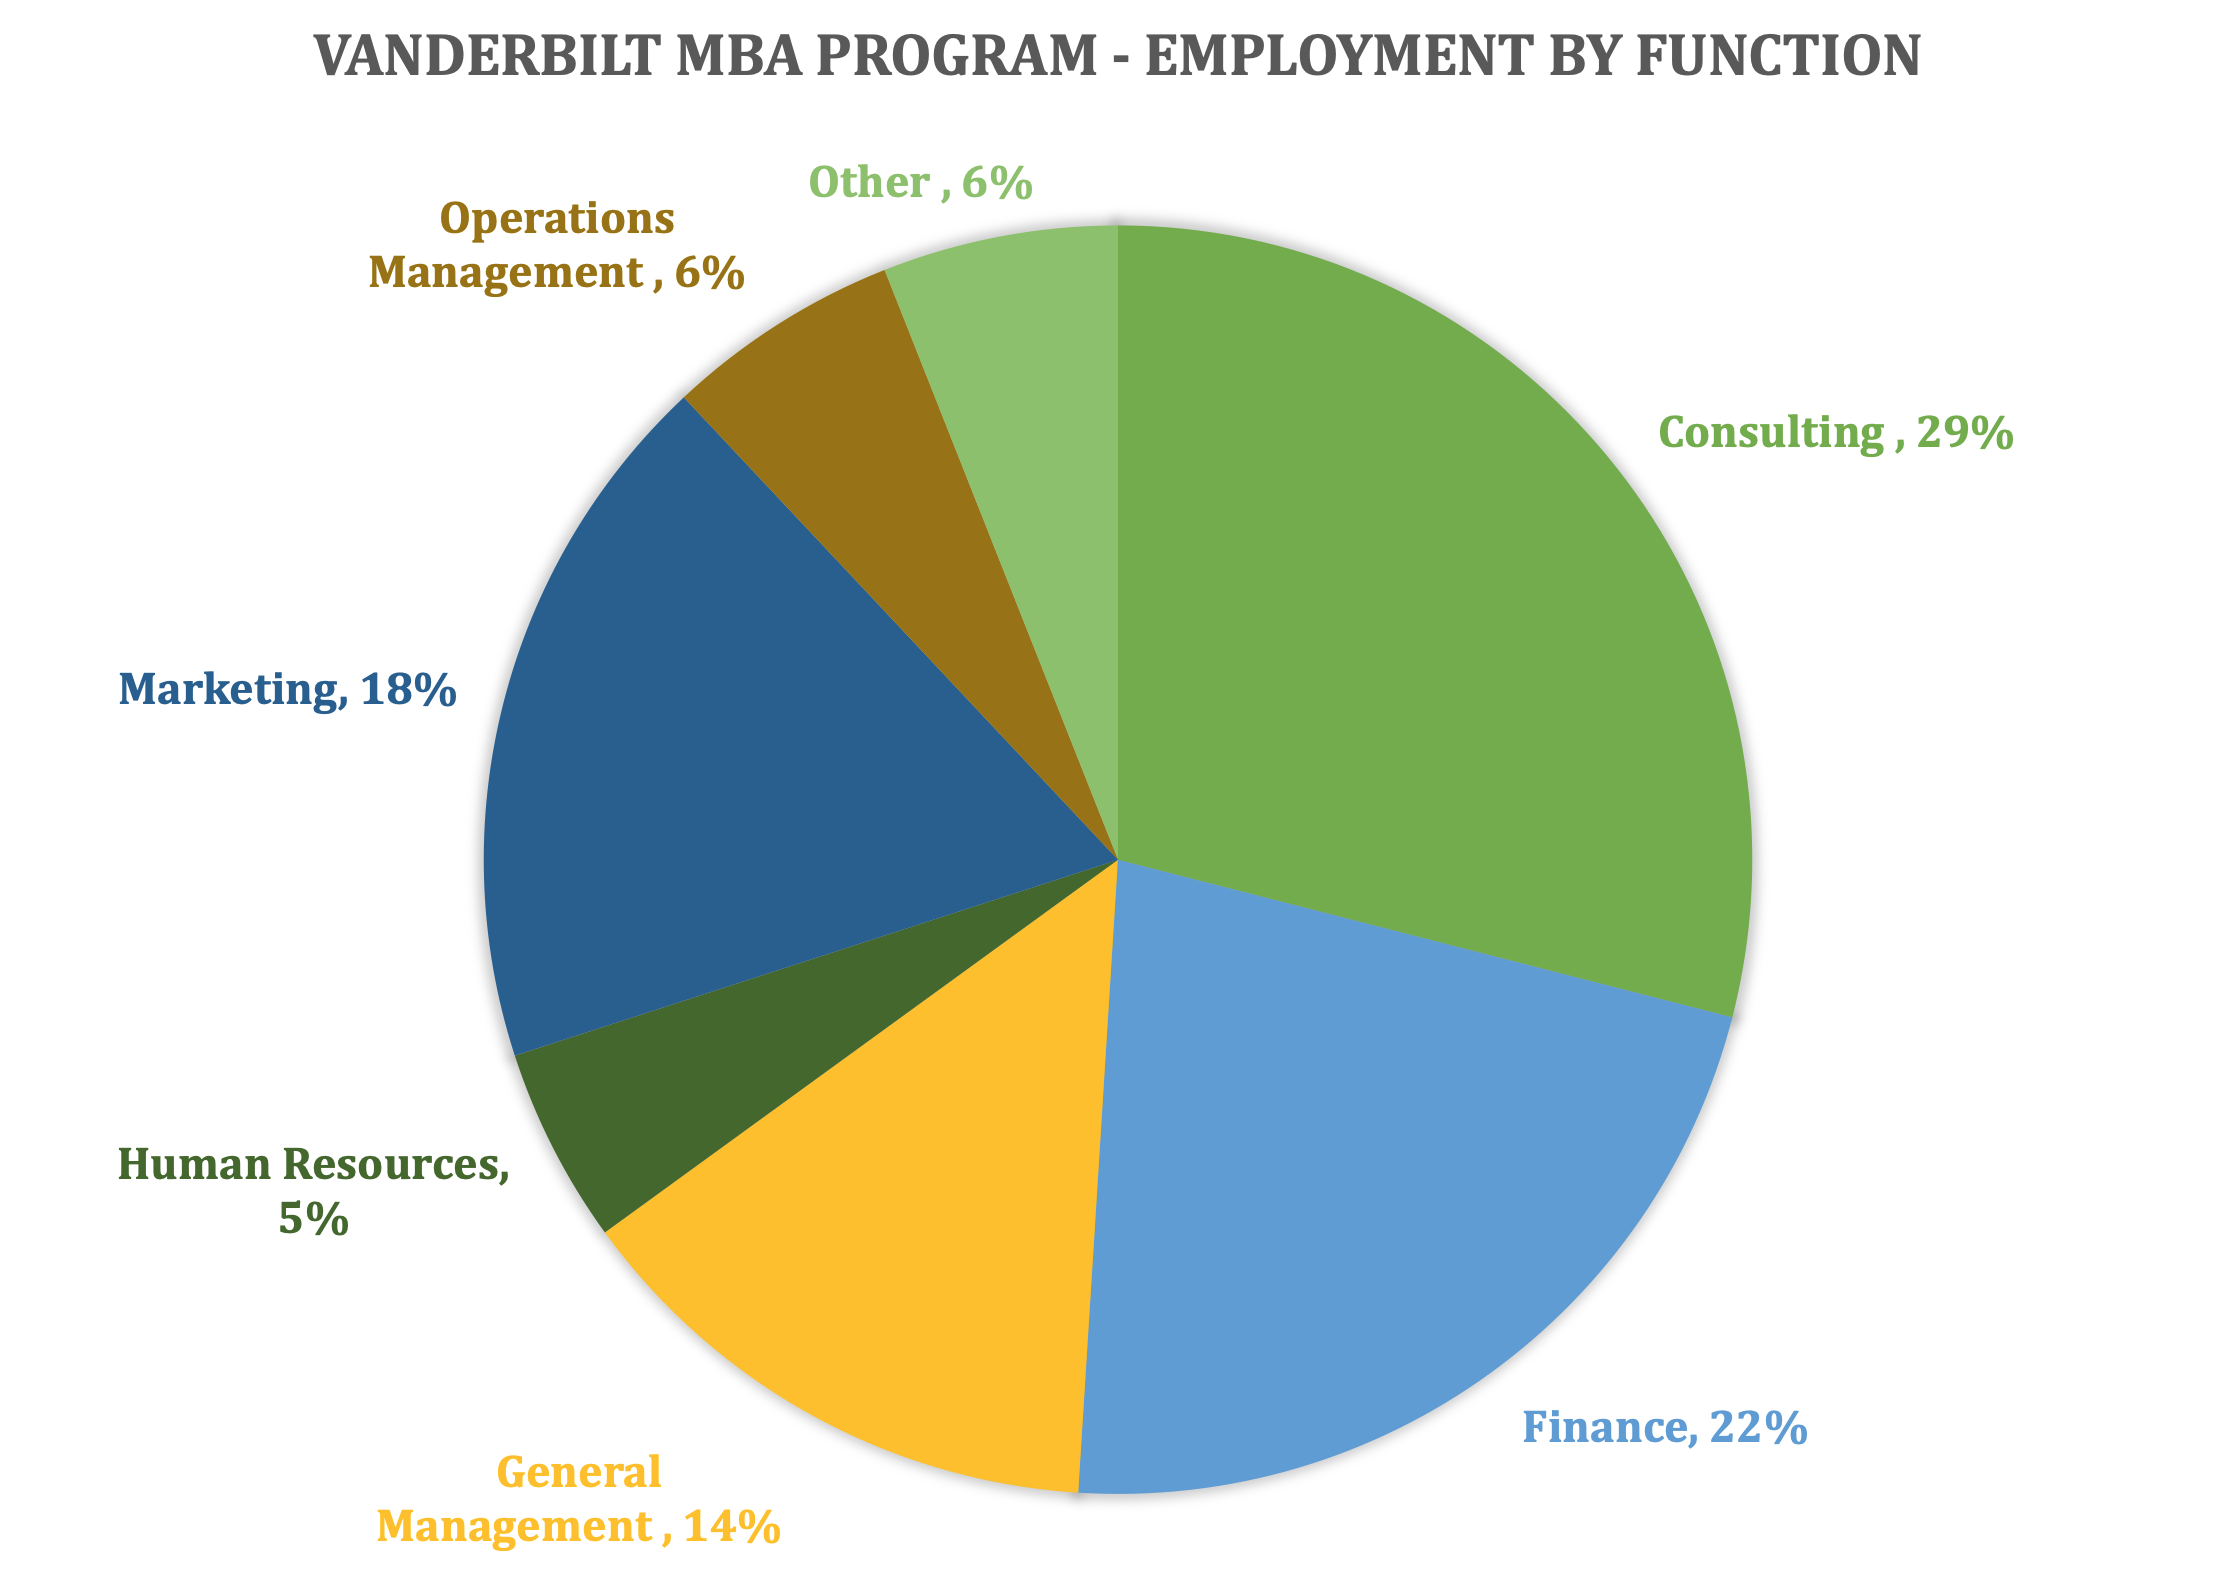 Vanderbilt MBA Program - Vanderbilt Owen Graduate School of Management - Employment by Function